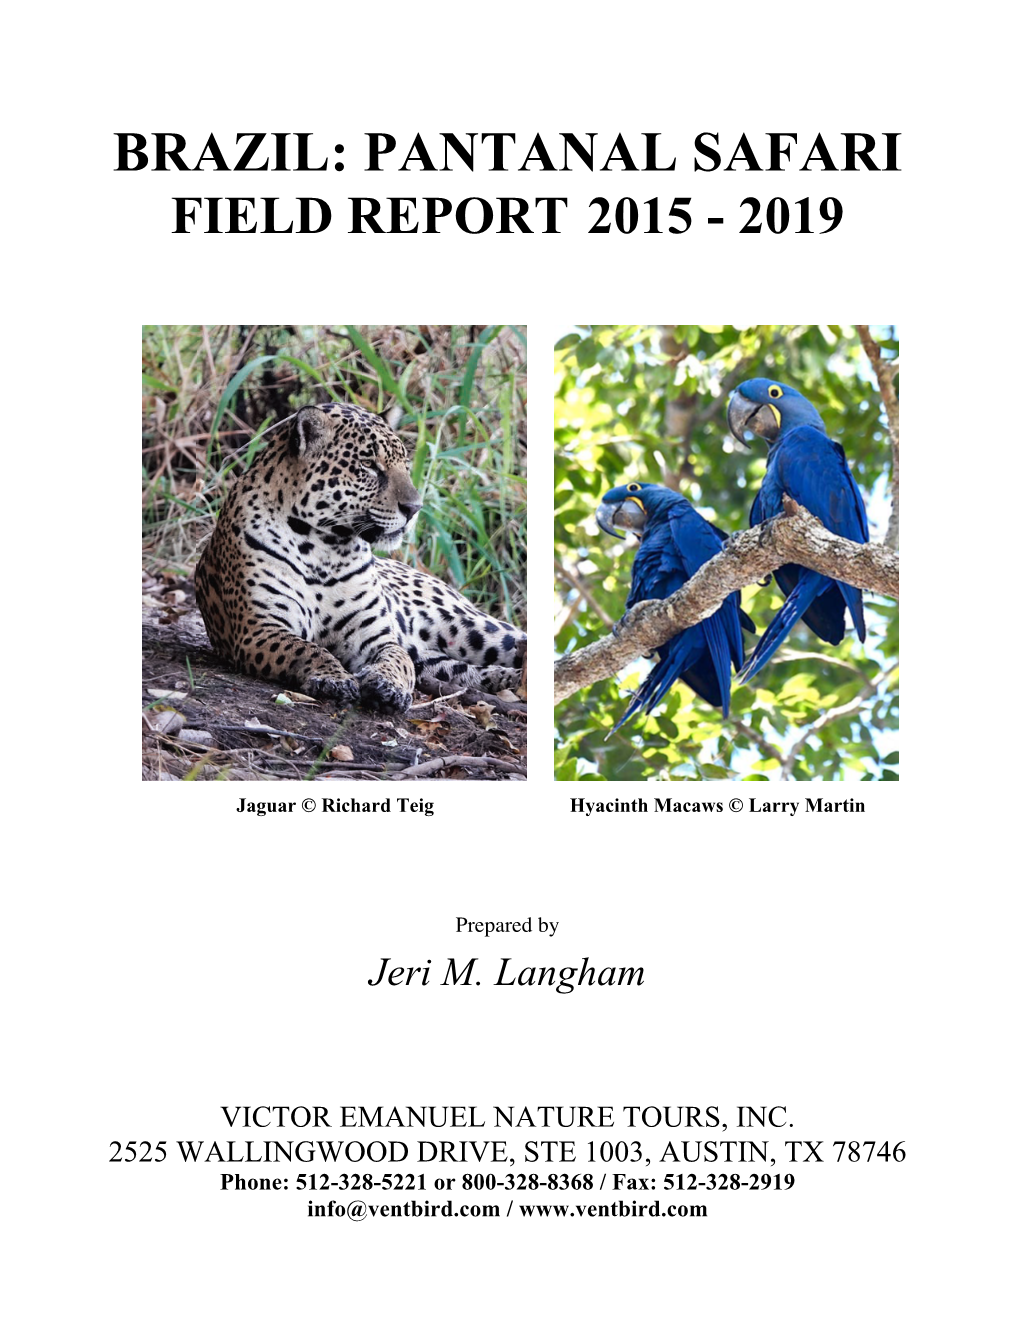 Brazil: Pantanal Safari Field Report 2015 - 2019